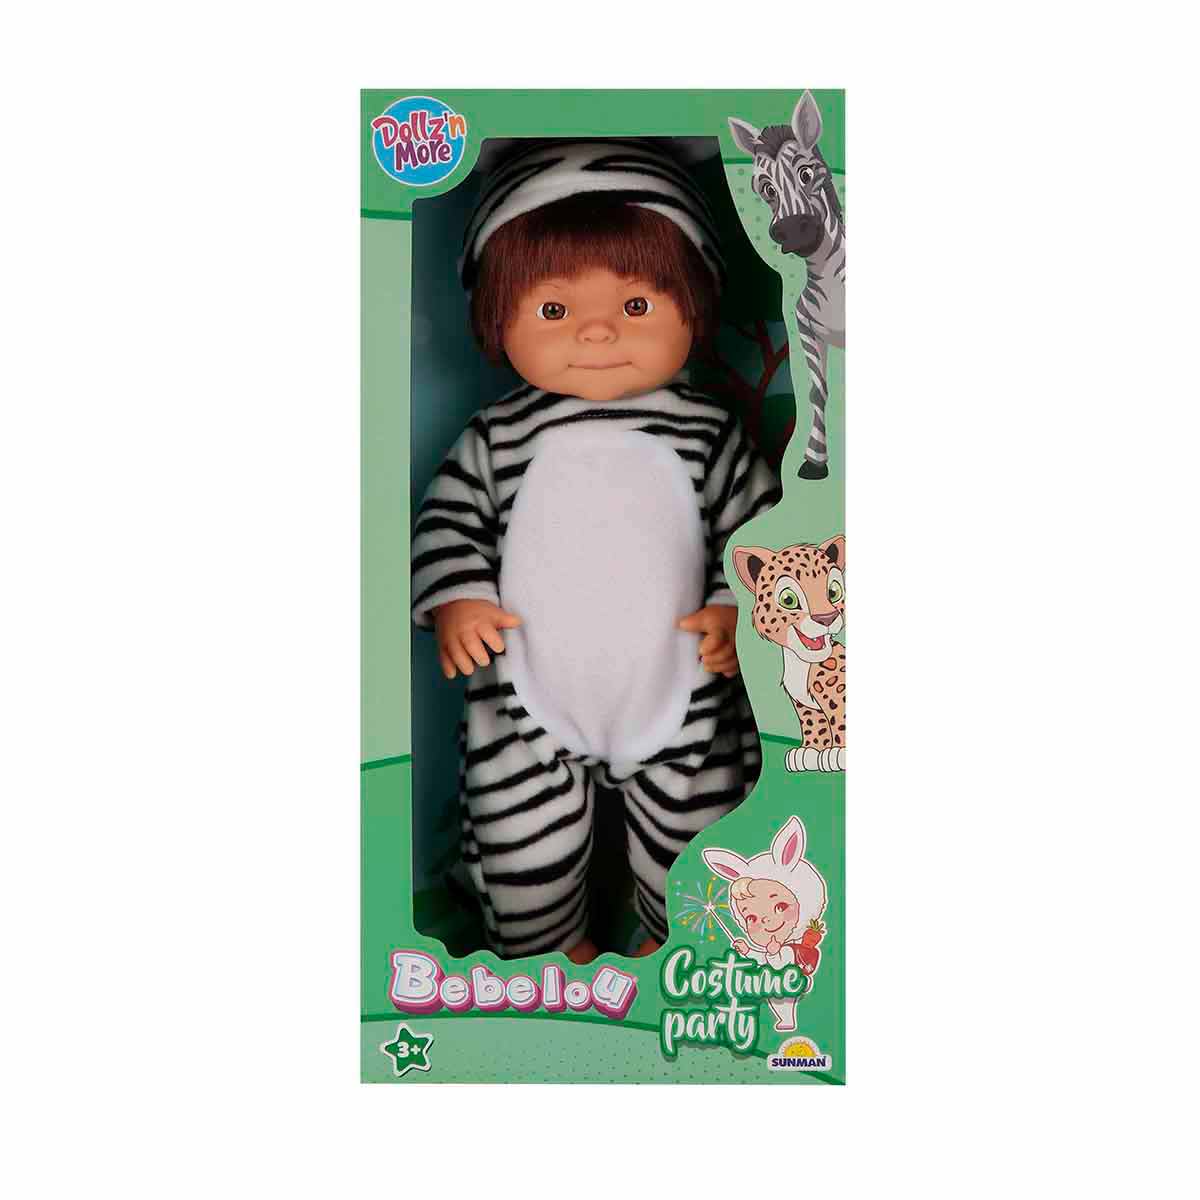 Papusa Bebelou in costum de zebra, Dollz And More, 40 cm